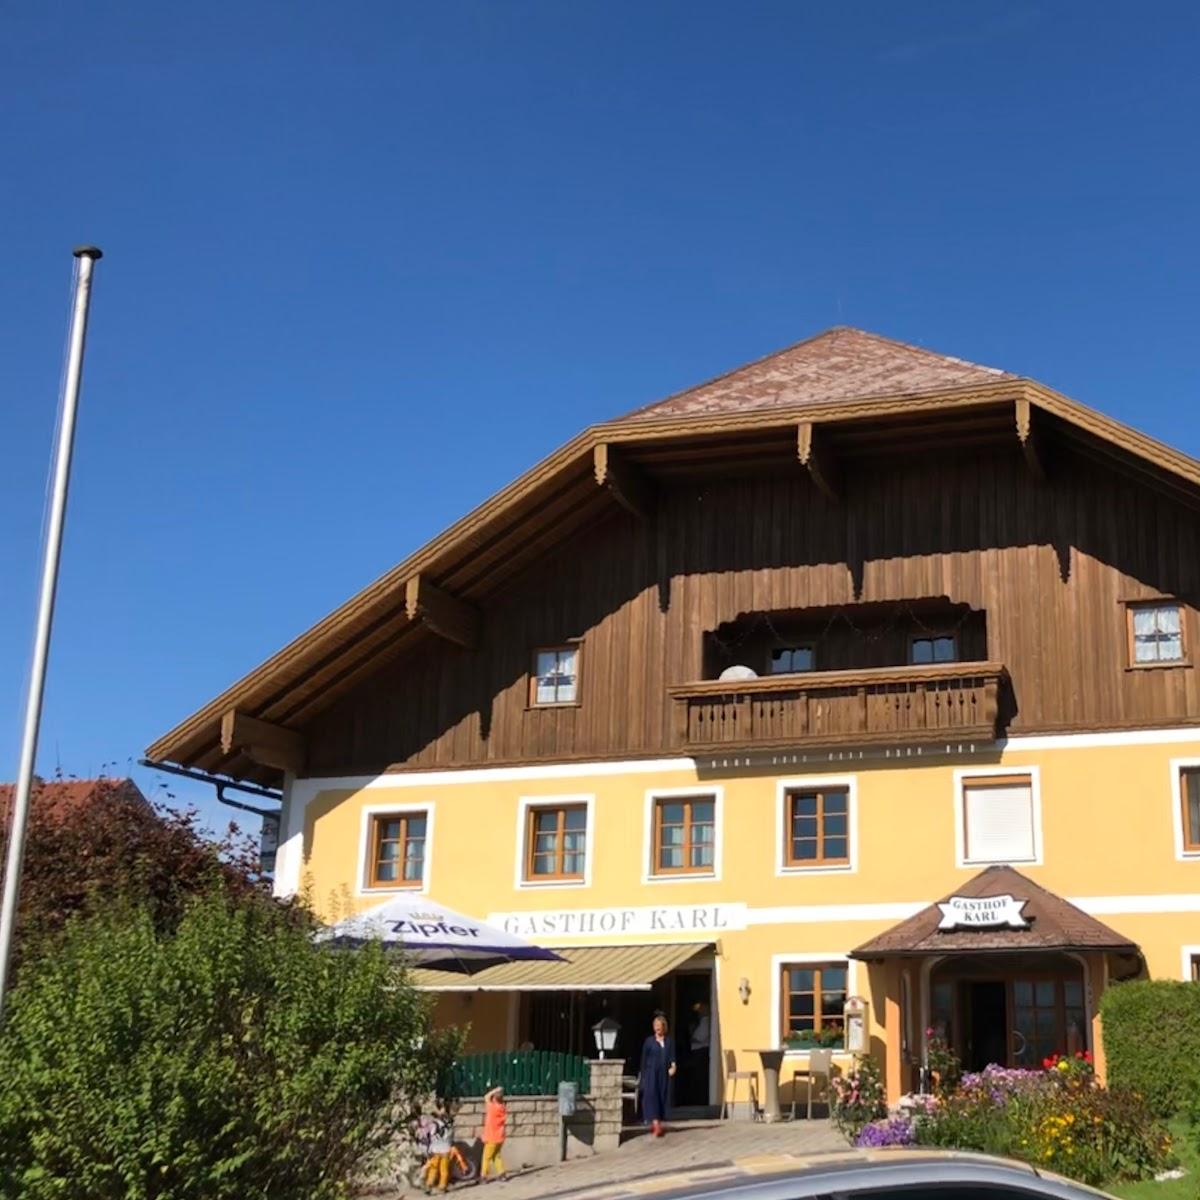 Restaurant "Gasthof Taverne" in Pöndorf